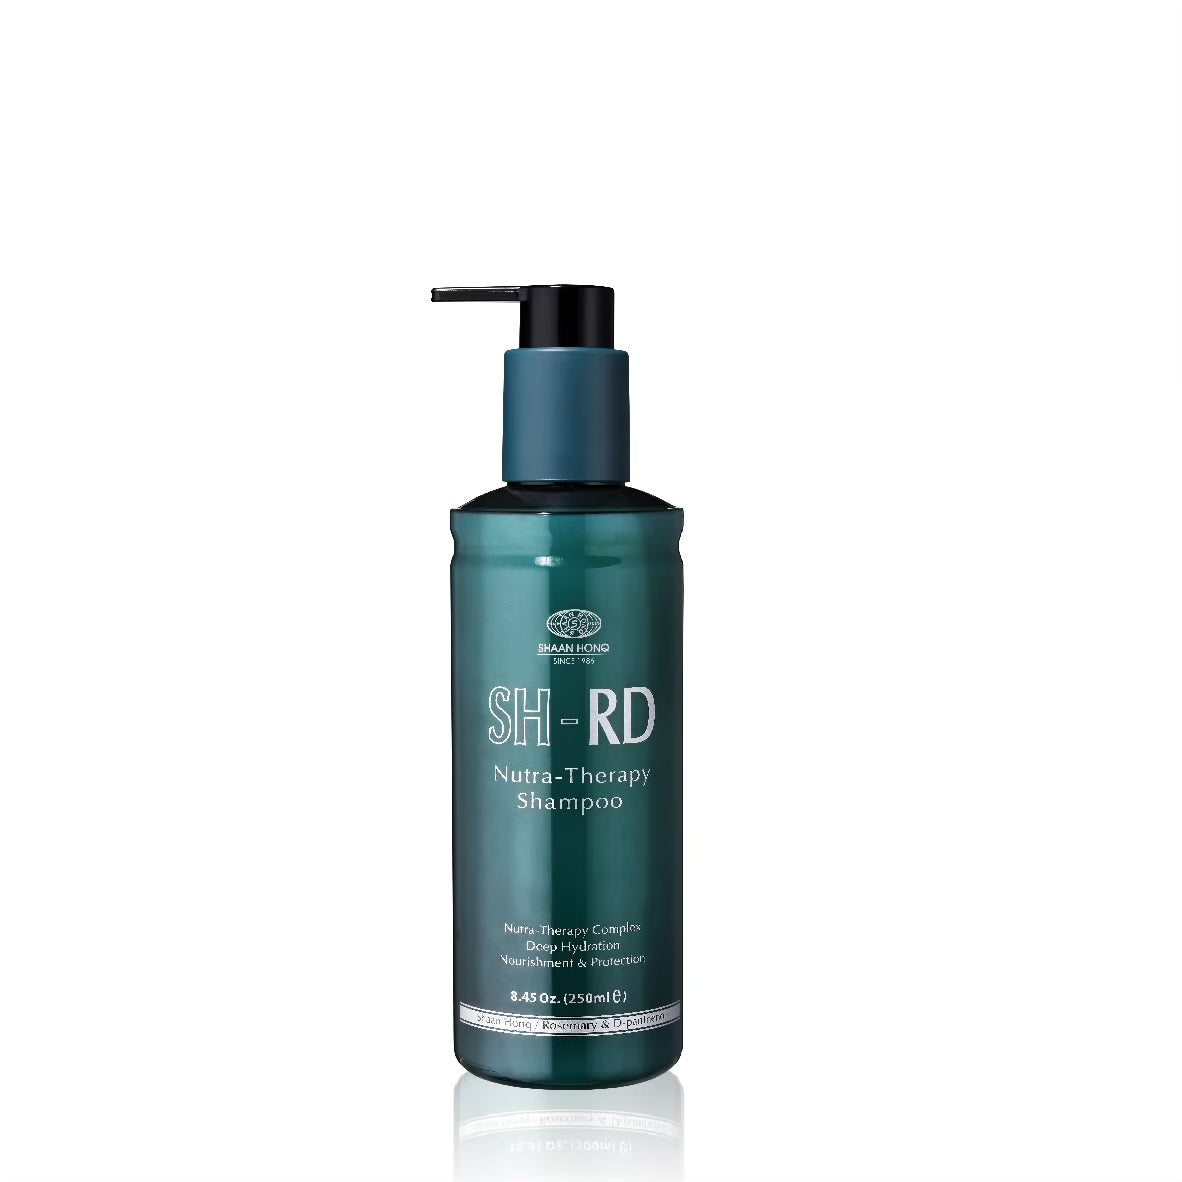 SH-RD Nutra-Therapy Shampoo (8.45oz/250ml) – Beauty